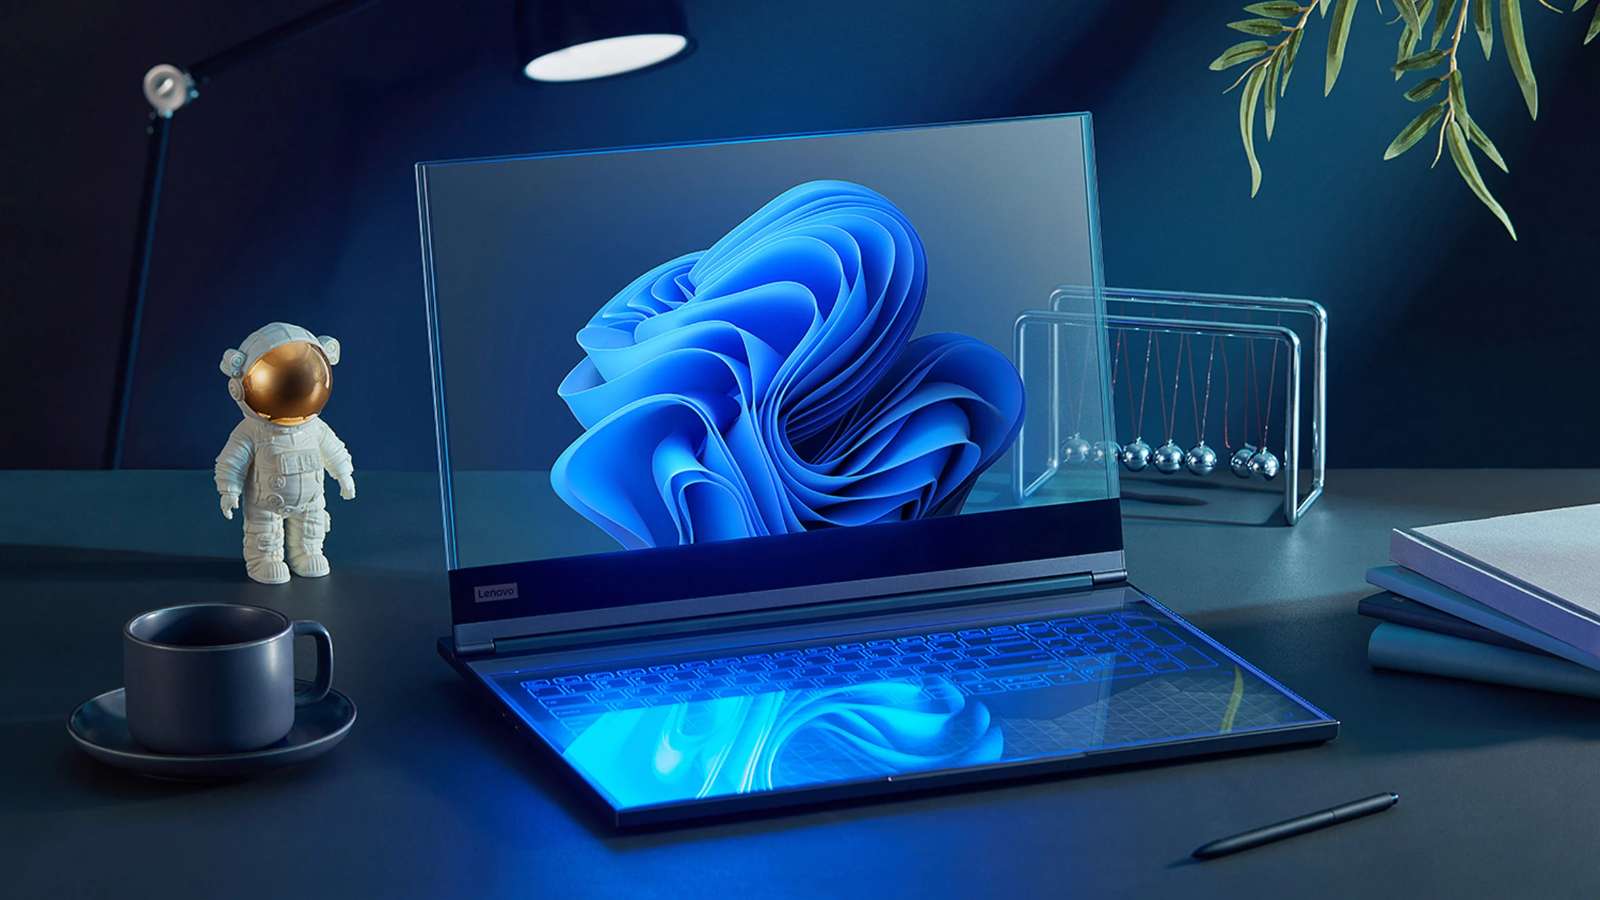 ThinkBook Transparent Display Laptop Concept